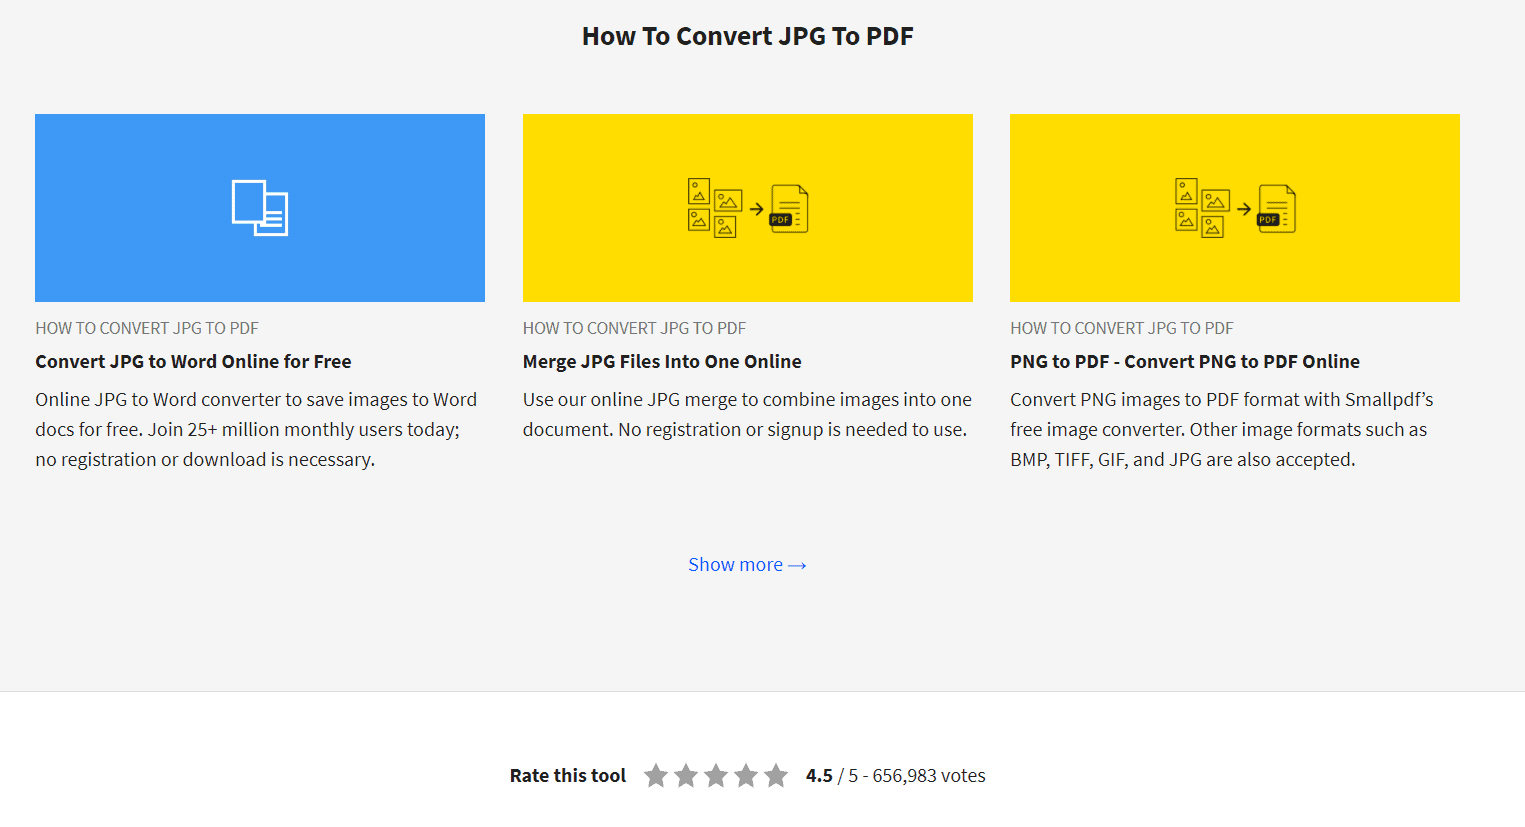 Convert JPG To PDF